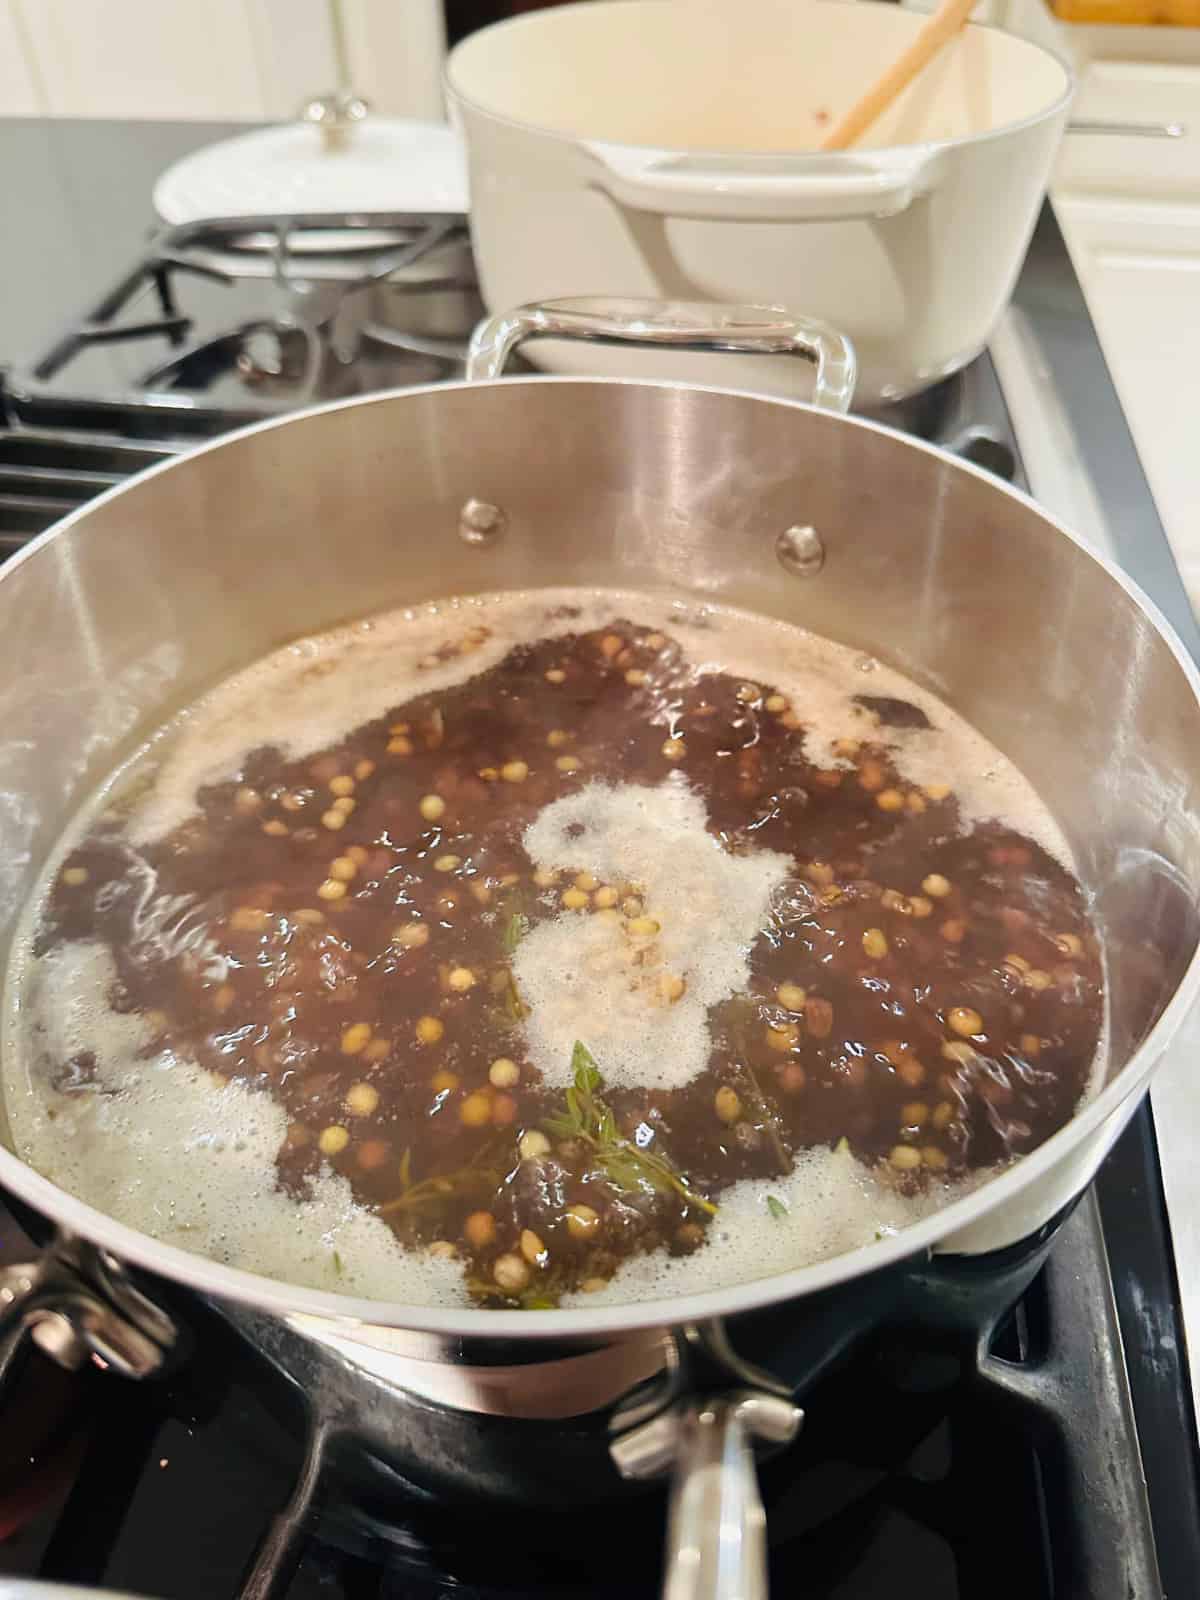 Lentils cooking in a steel pot.